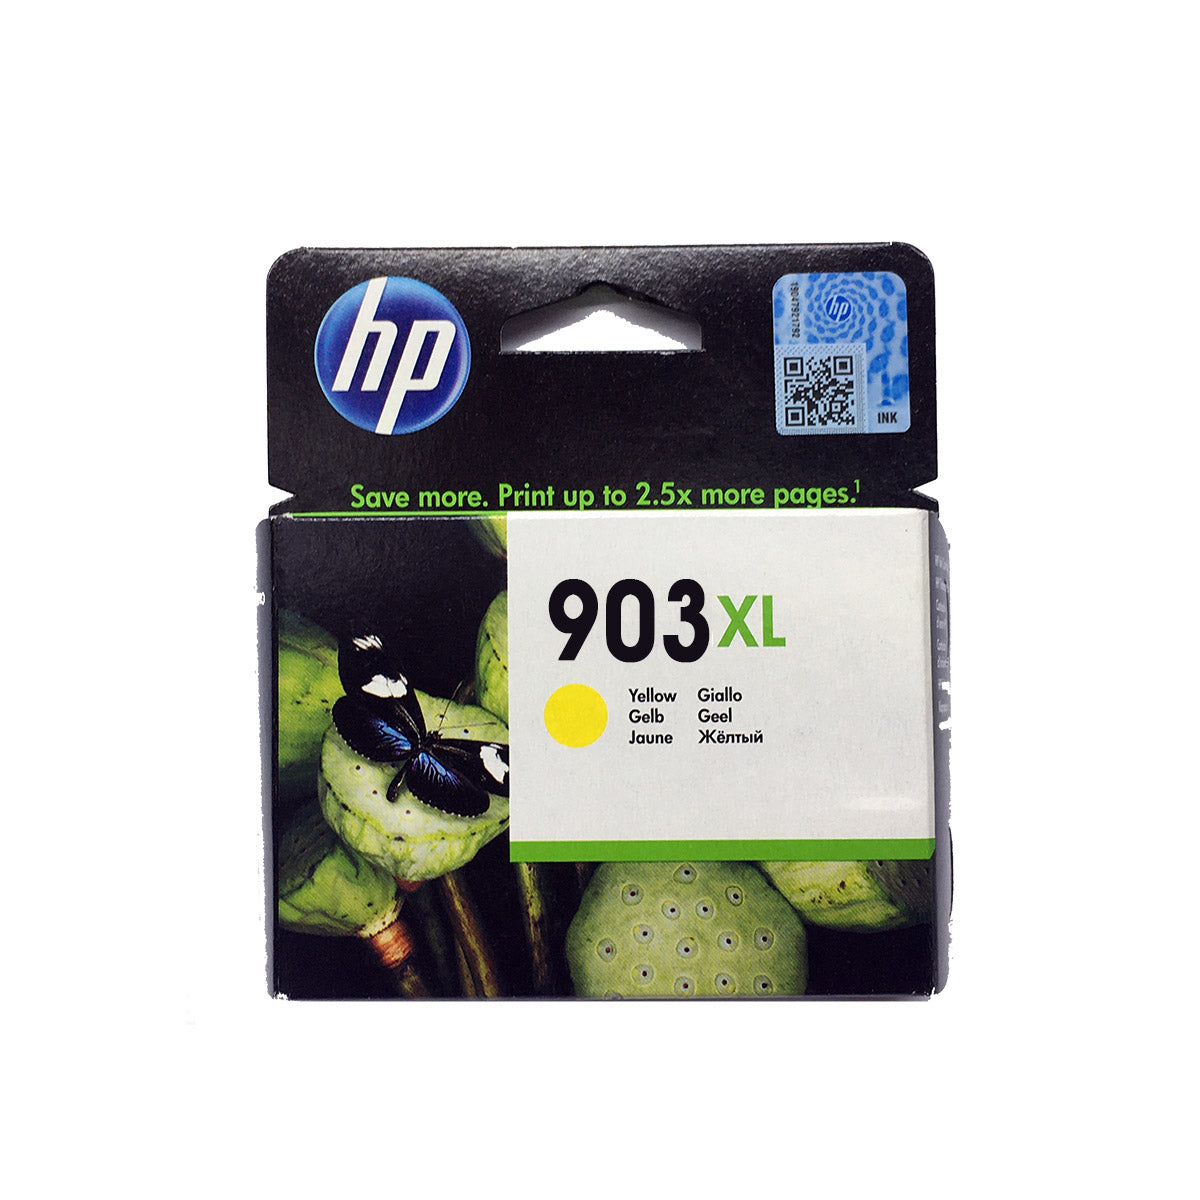 Shop HP 903XL Original Ink Cartridge Yellow Color online in Abu Dhabi, UAE